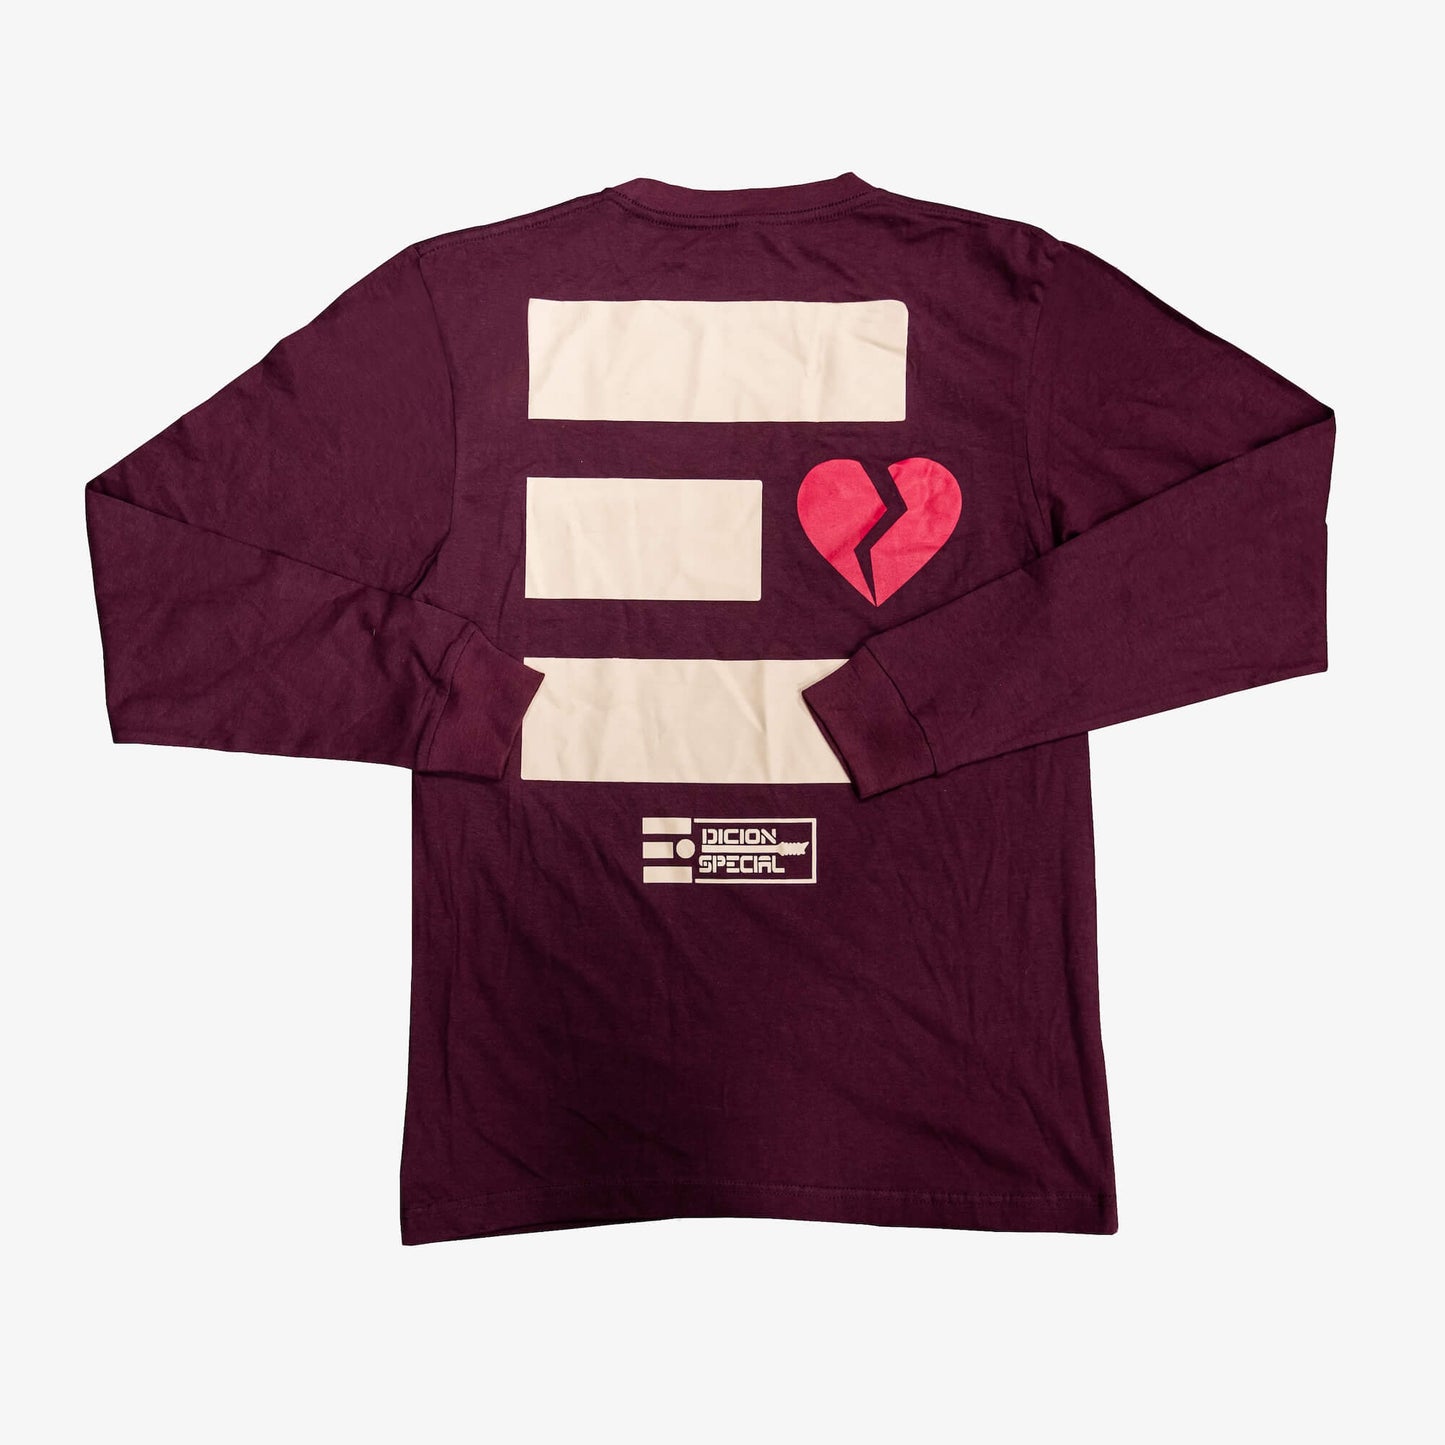 Edicion Especial Broken Heart - Long Sleeve Shirt (burgundy/beige)